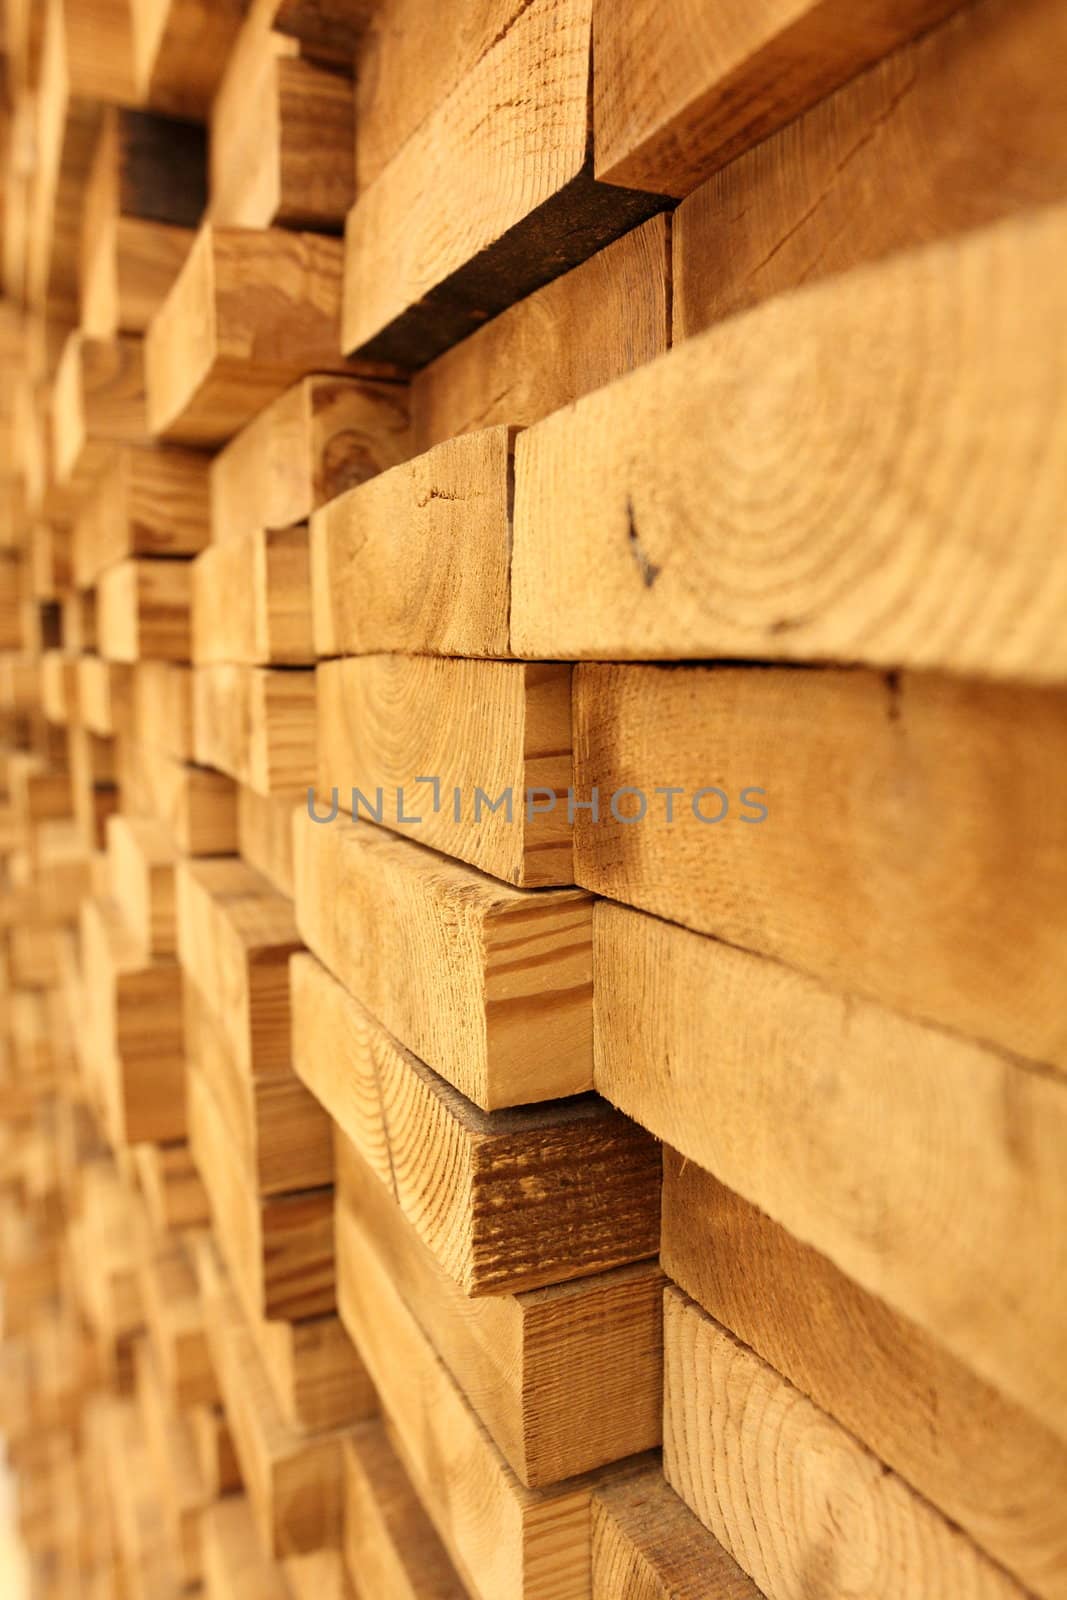 Wooden block wall design showing texture,grain , and depth